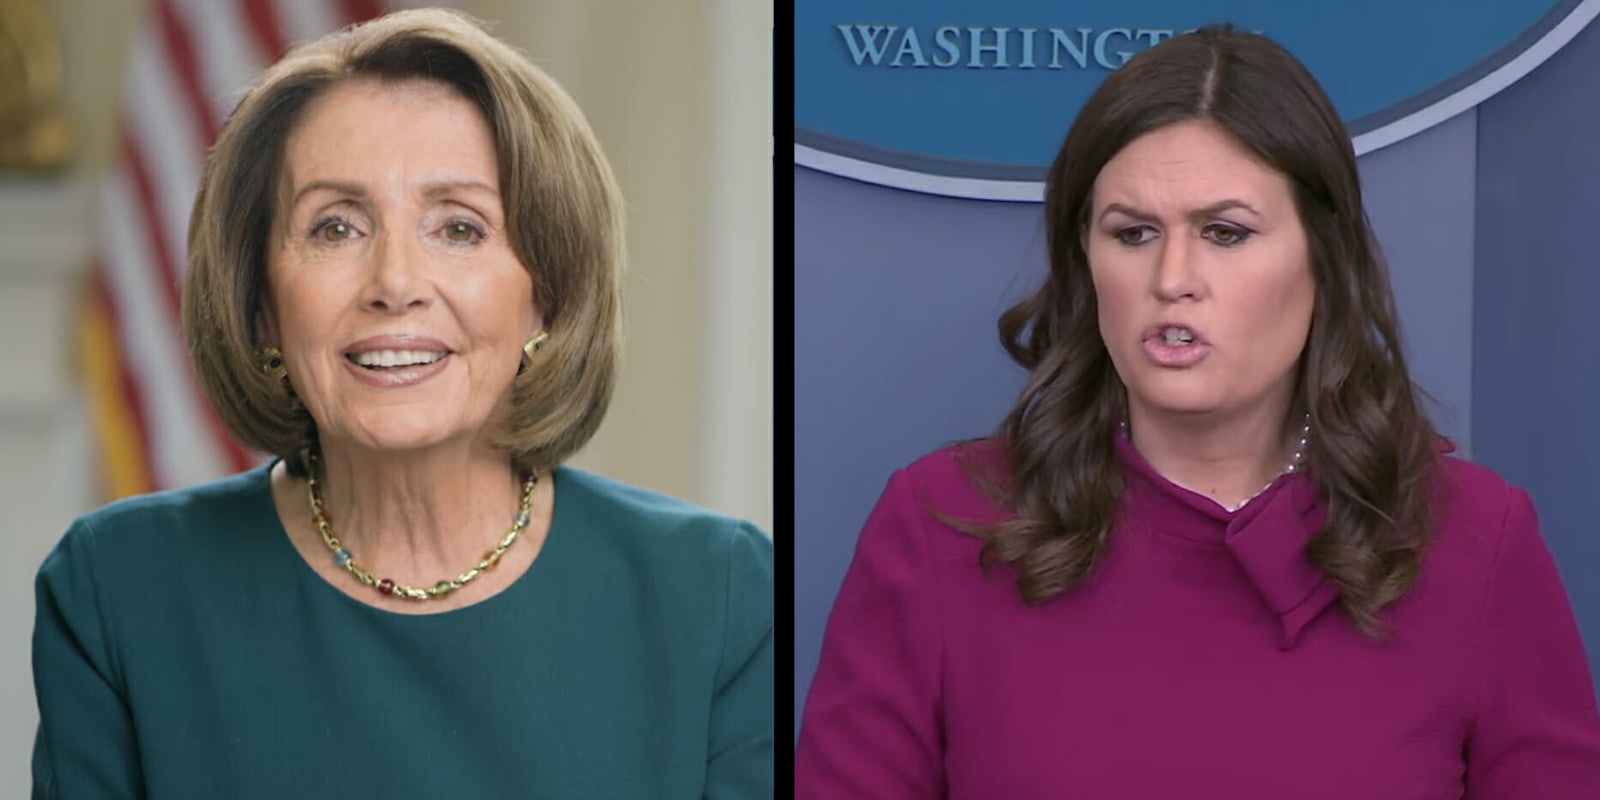 White House Press Secretary Sarah Huckabee Sanders told CNN that she thinks House Minority Leader Nancy Pelosi needs to smile more.